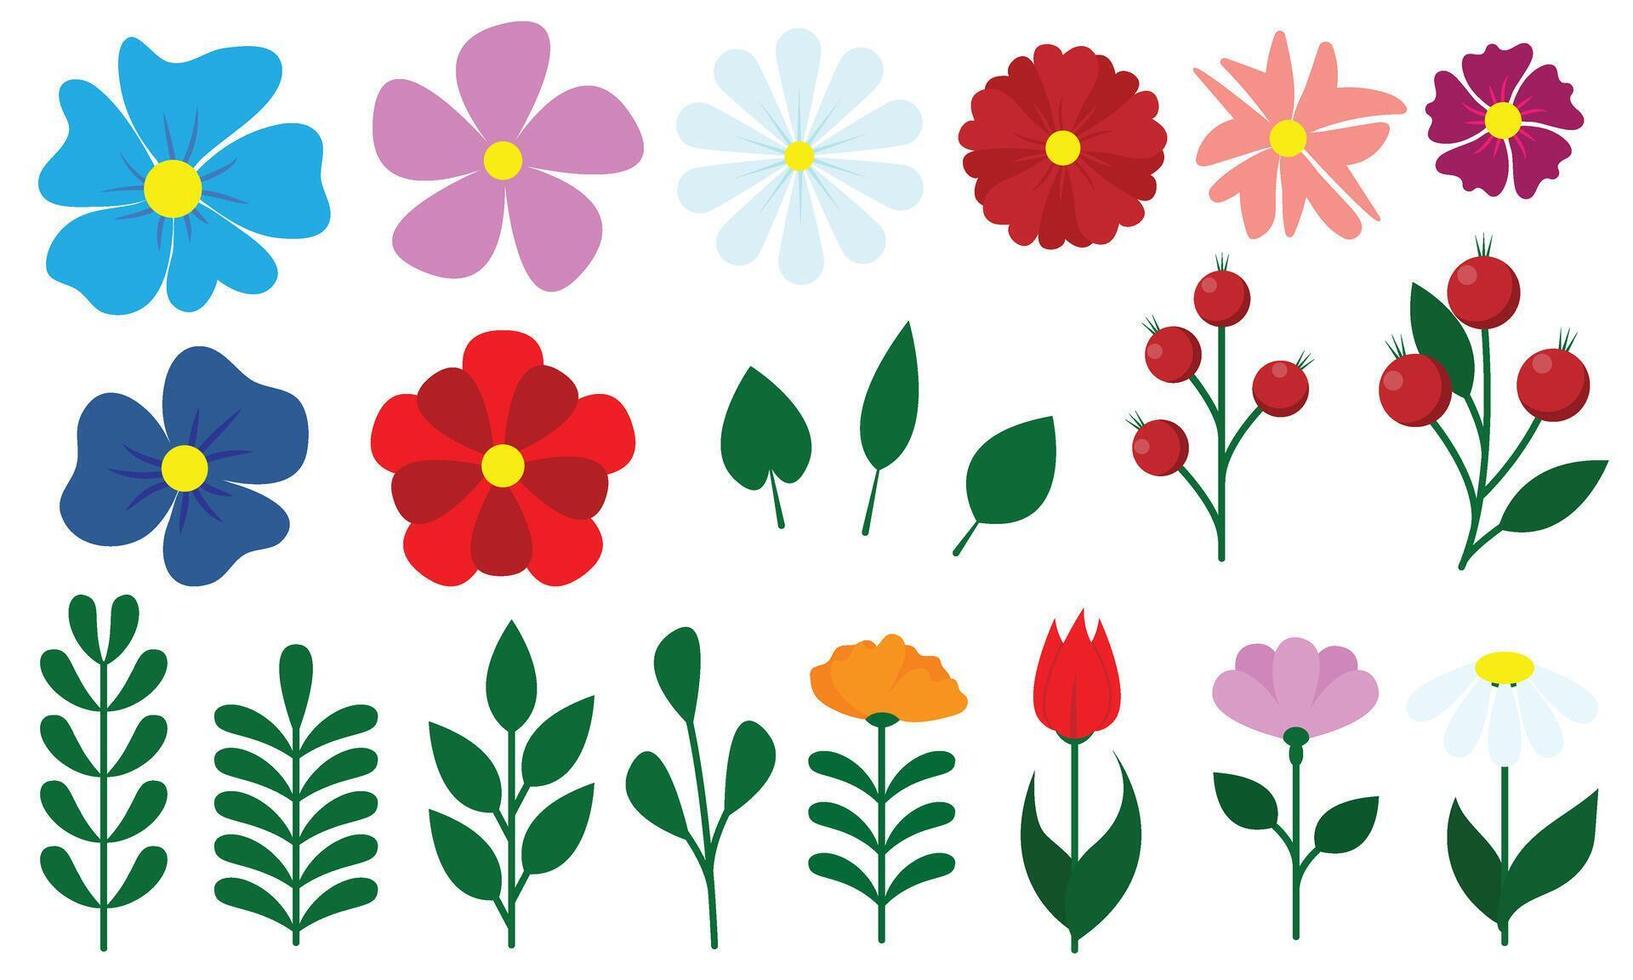 Minimalistic spring florals set. Cartoon simple flowers, leaves, brunches, plants, berries. Vector illustration